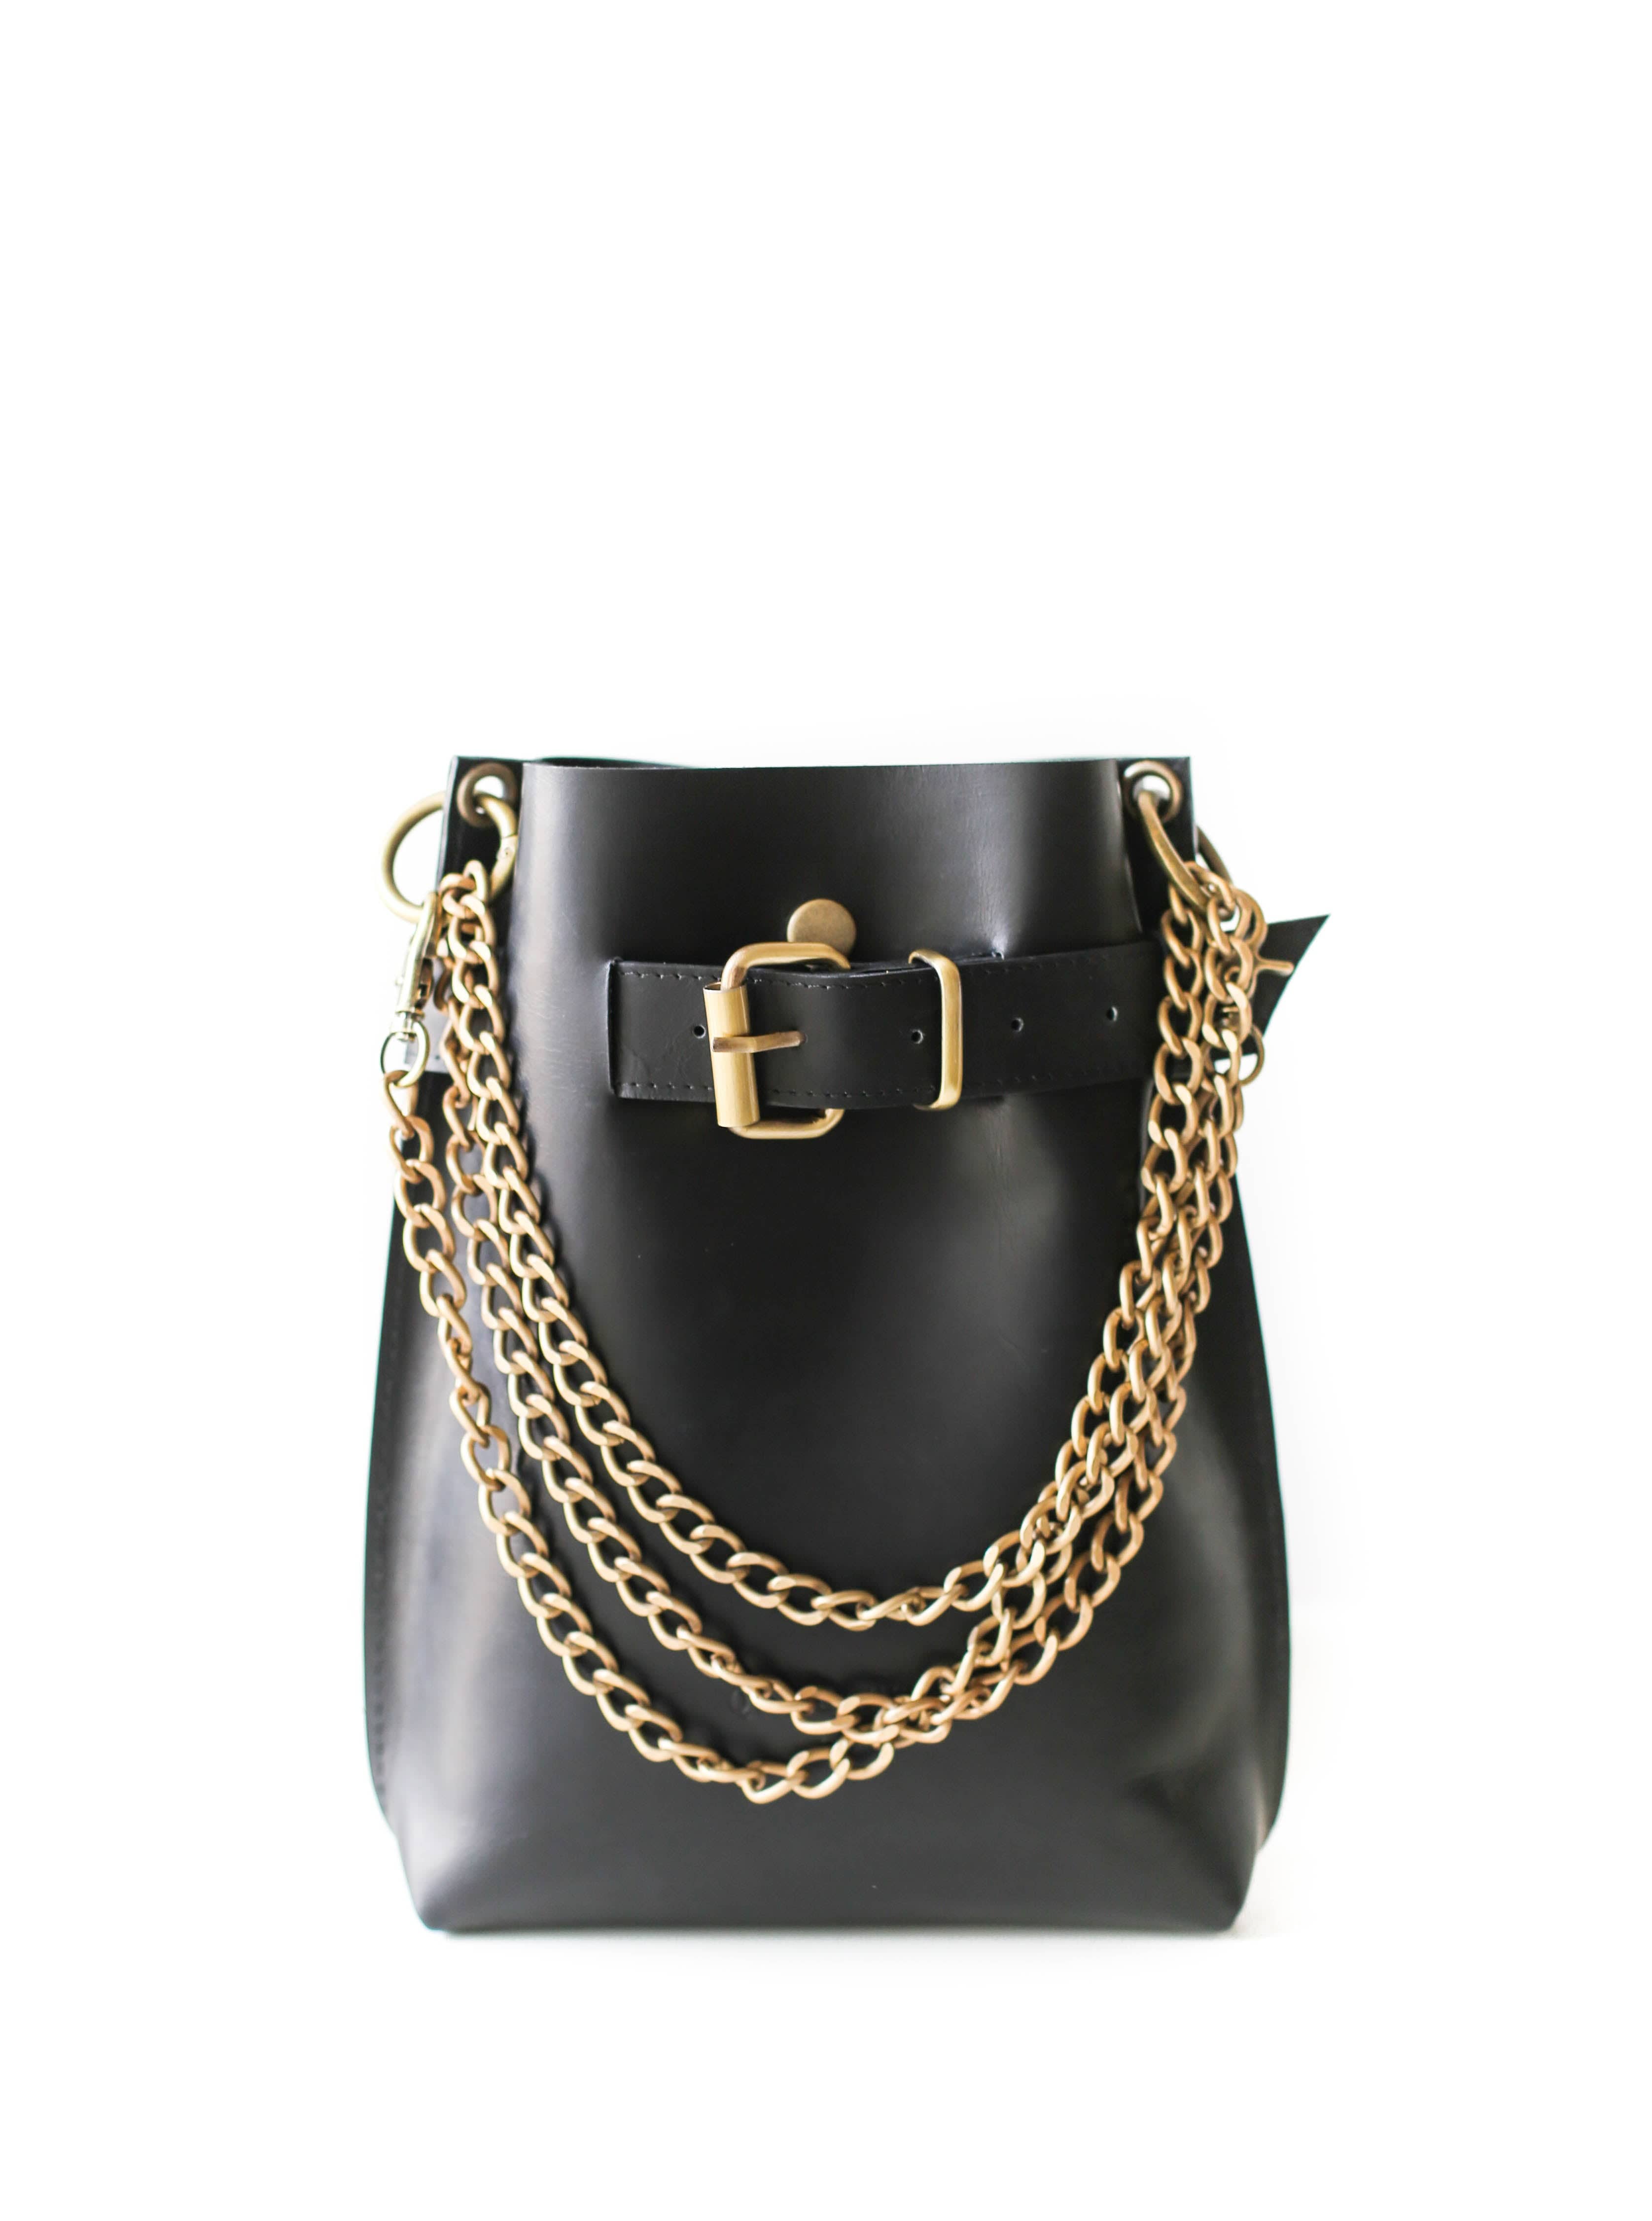 Women's Black Leather TOMMY HILFIGER PURSE Zip Top Small Shoulder Handbag |  eBay